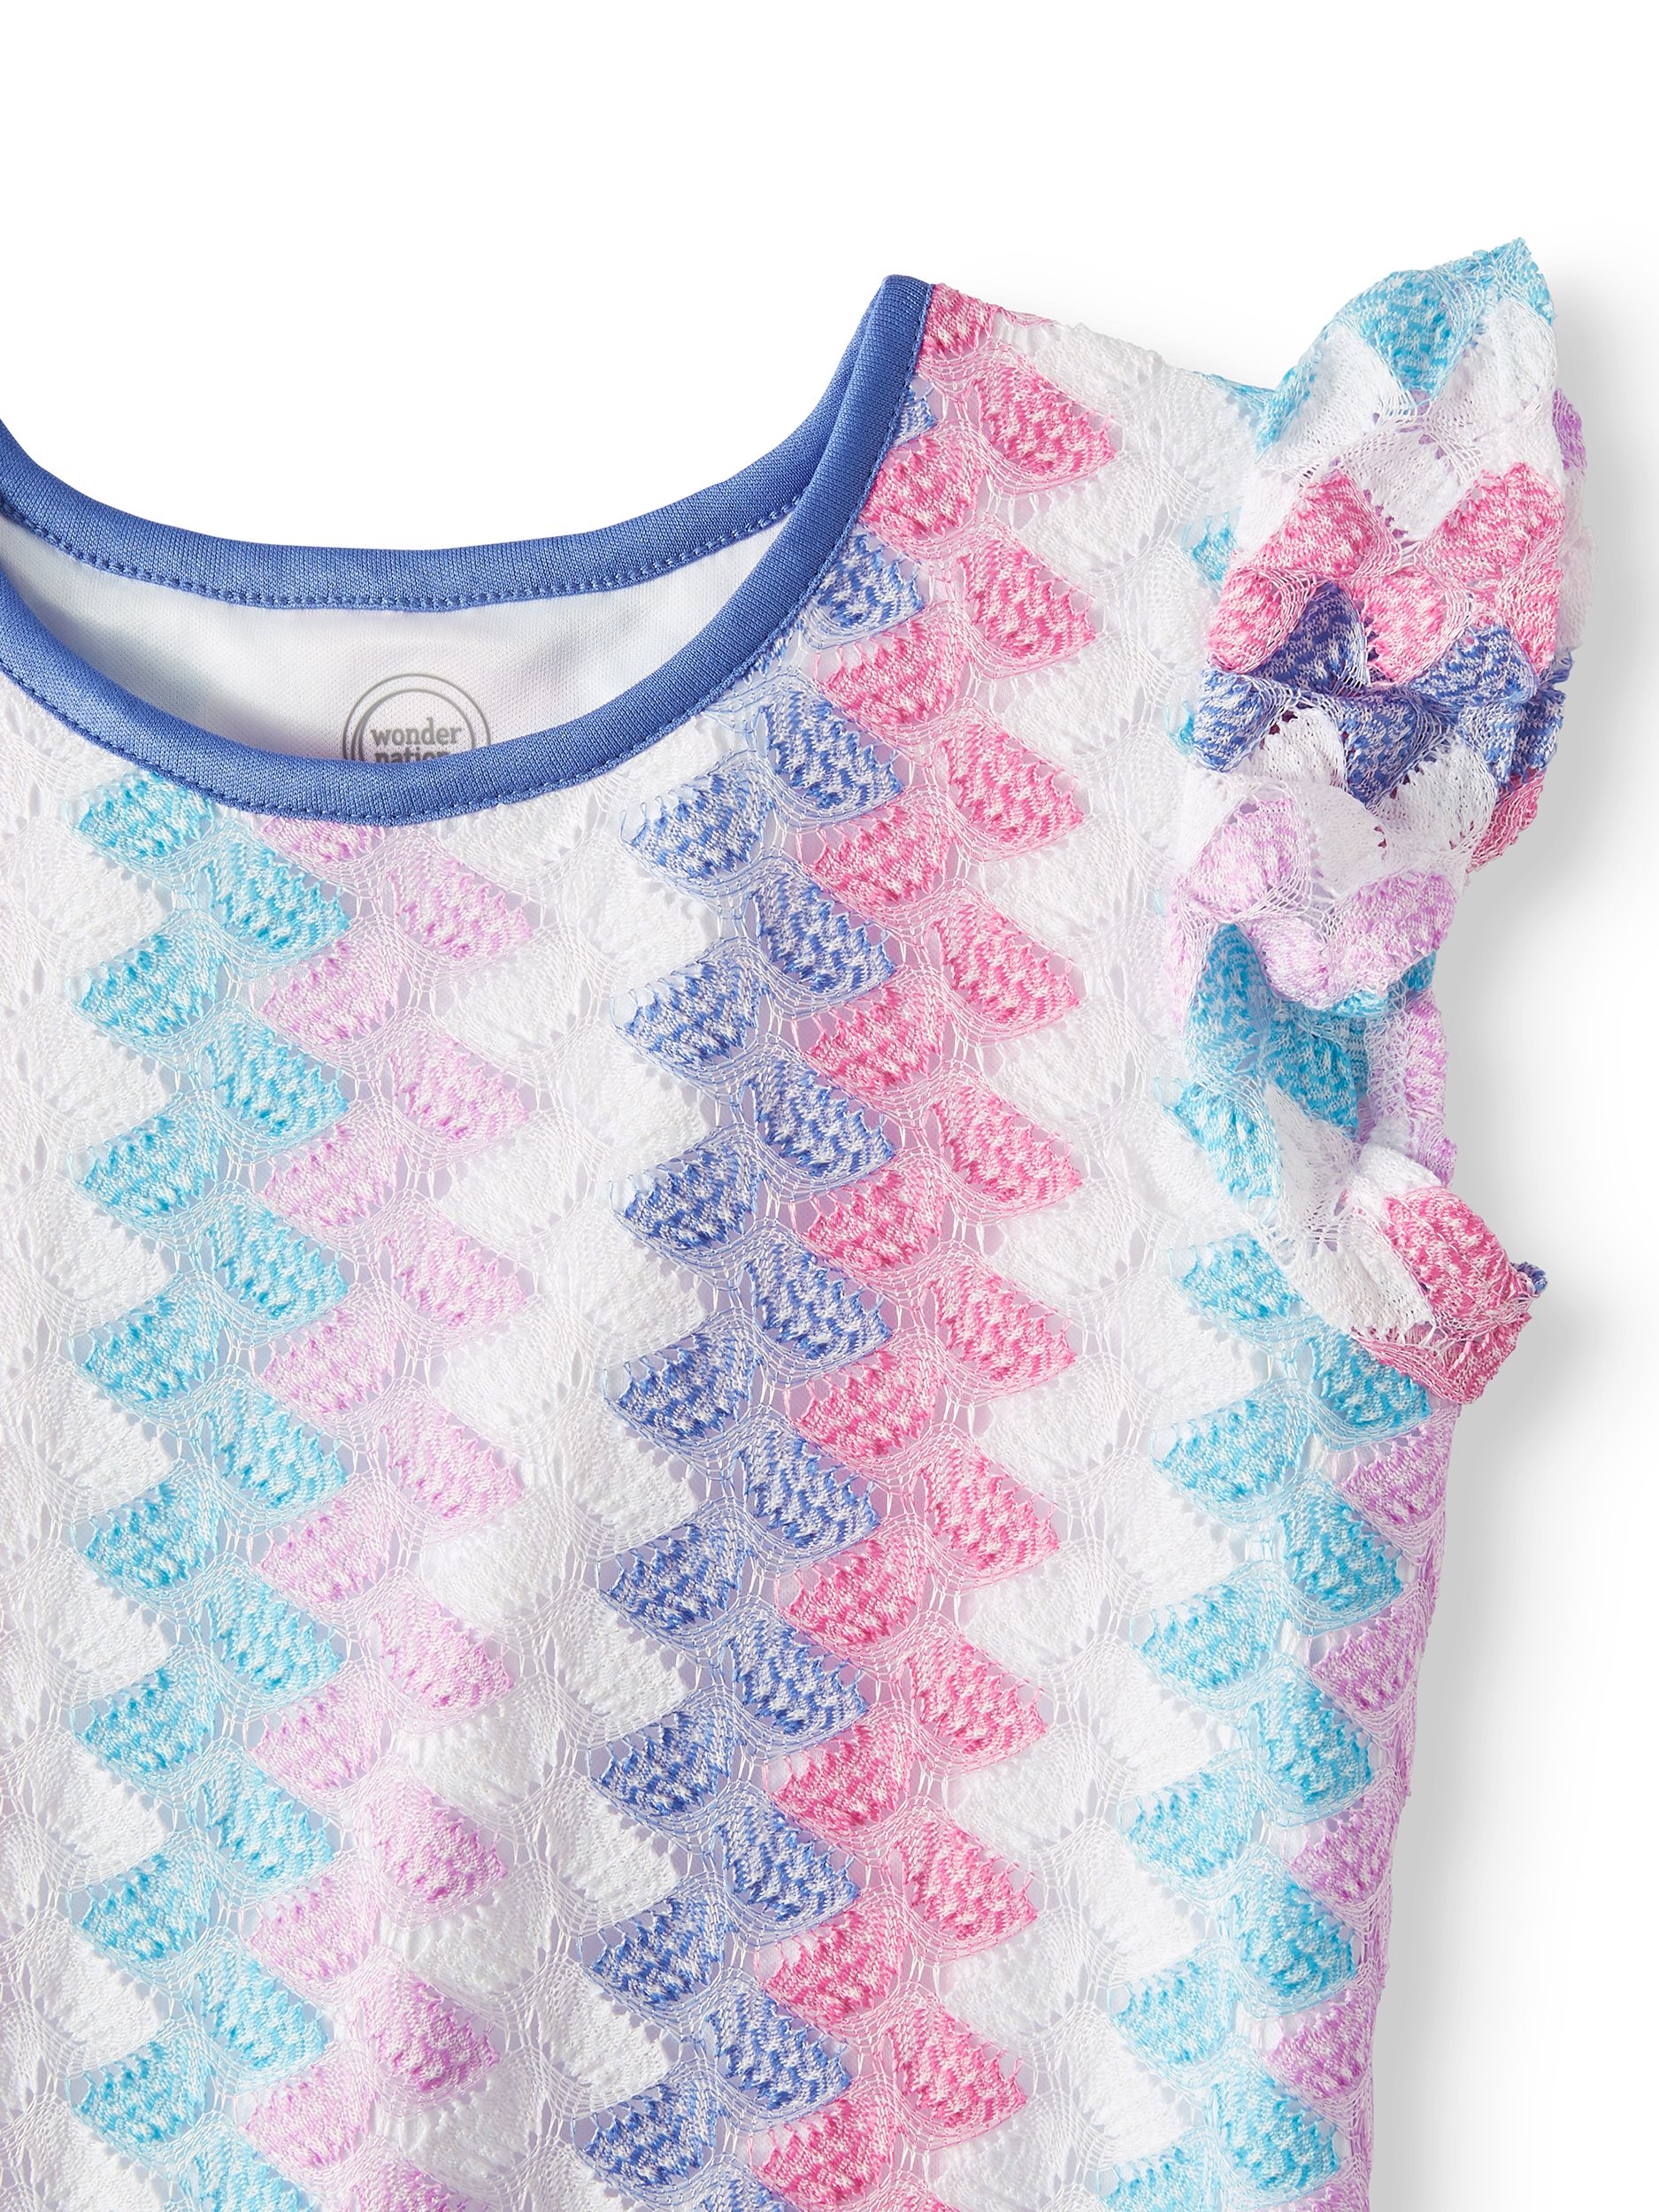 Wonder Nation Knit Lace Peplum Hem Dress (Little Girls, Big Girls & Big Girls Plus) - image 3 of 3